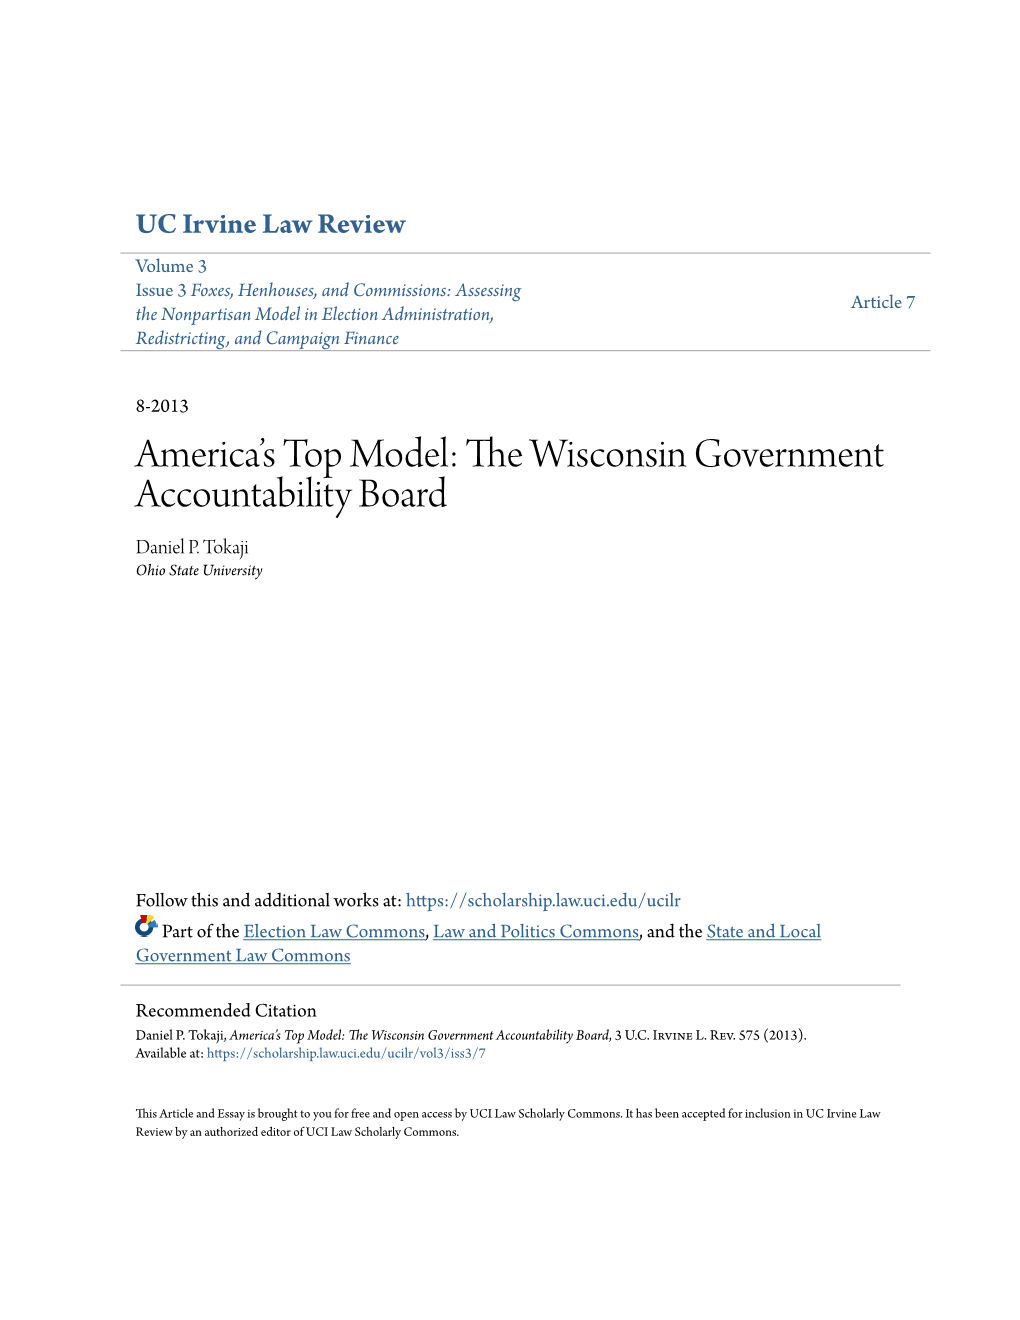 The Wisconsin Government Accountability Board, 3 U.C